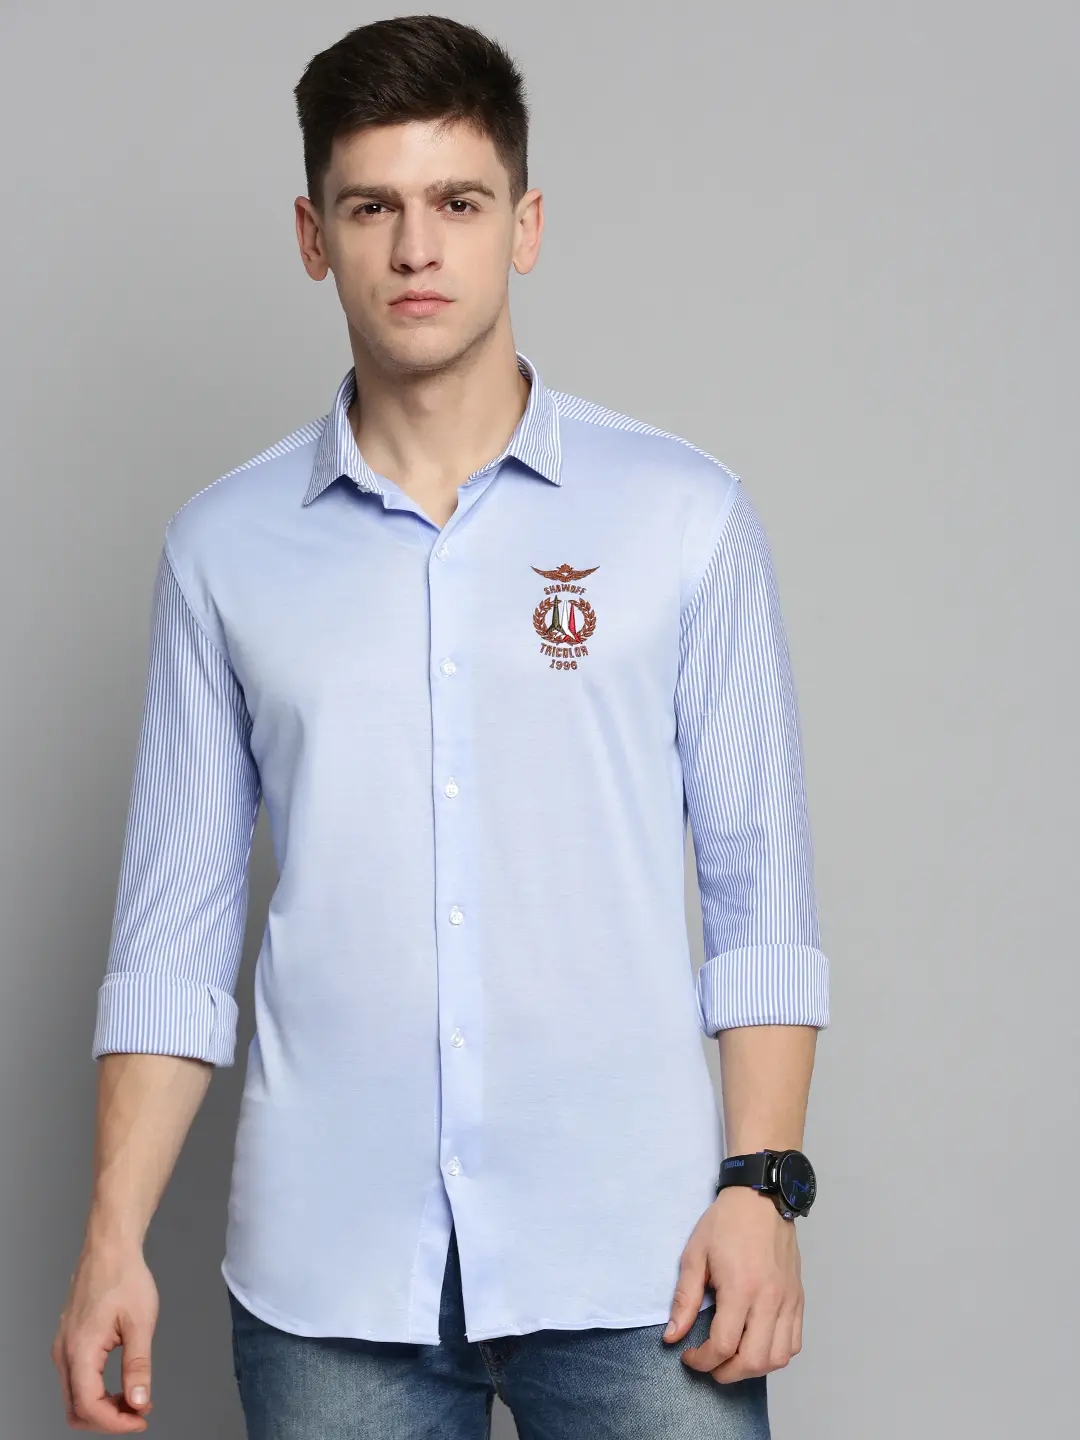 SHOWOFF Men's Spread Collar Blue Striped Shirt